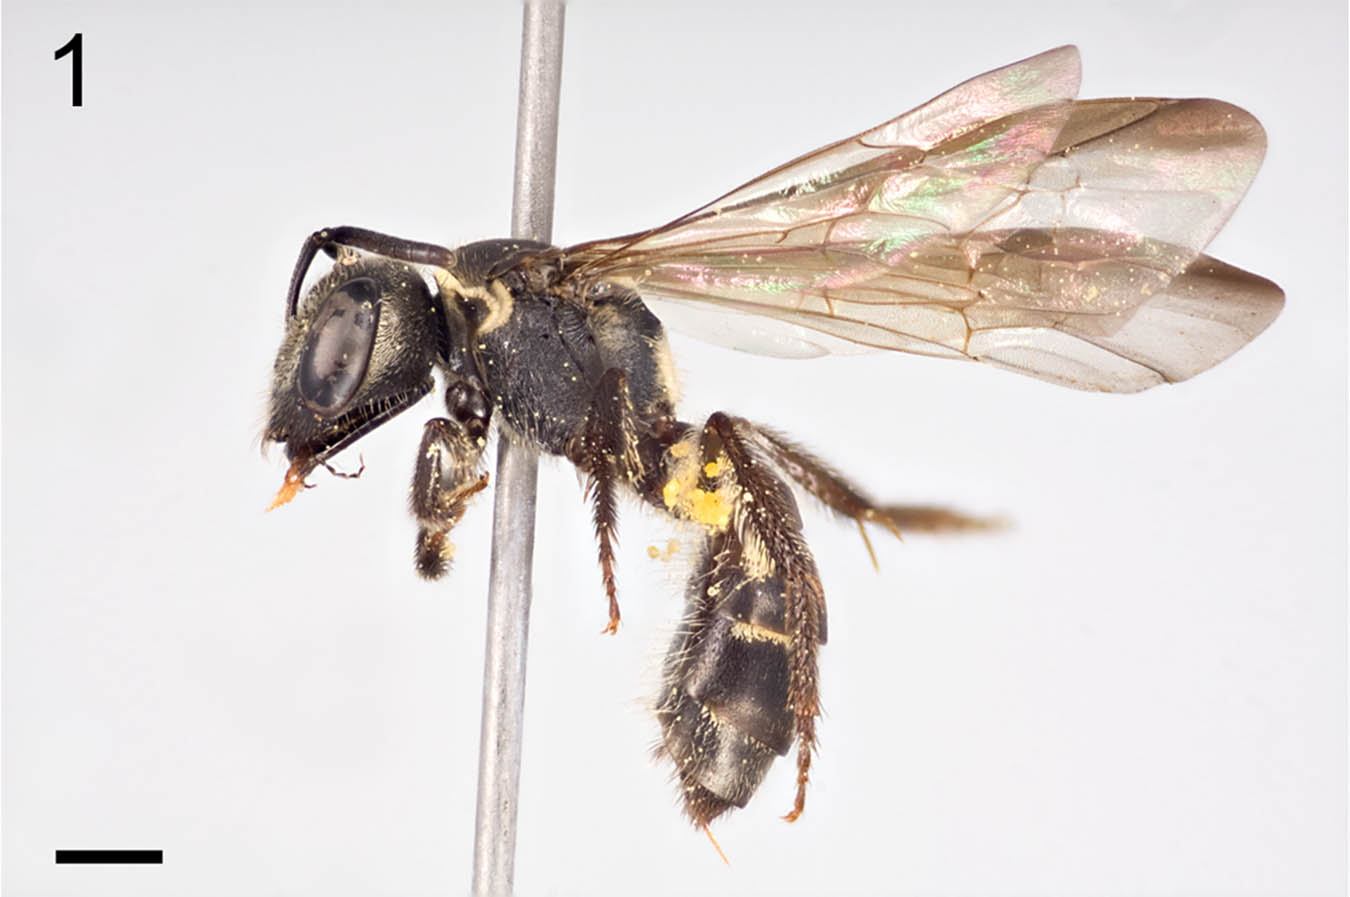 					View No. 13 (2013): A new species, Lasioglossum (Eickwortia) hienae, from Mexico (Apoidea: Halictidae)
				